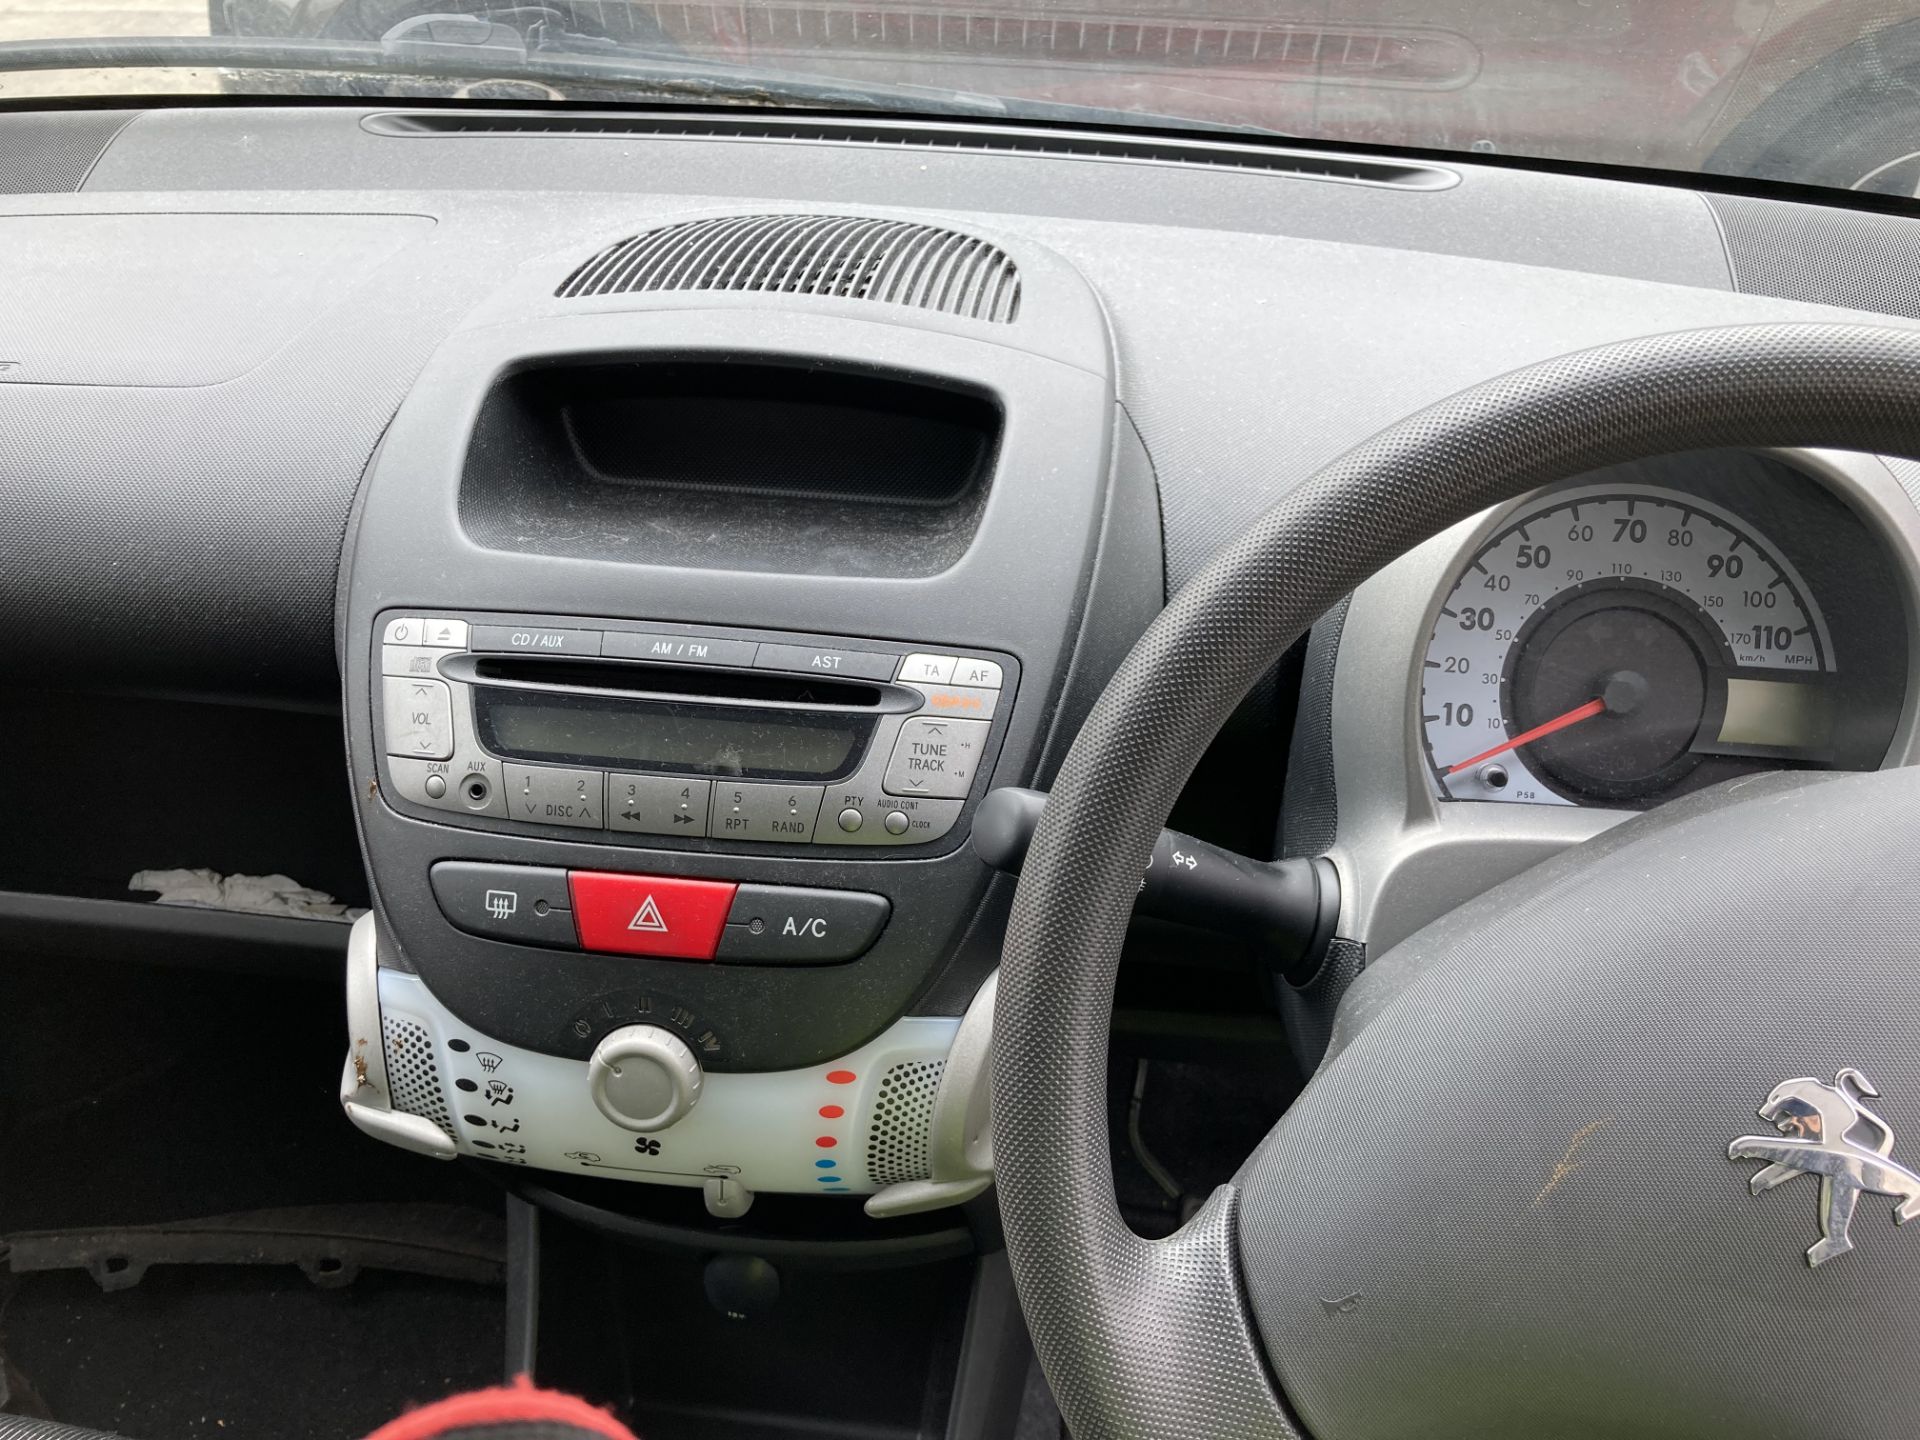 PEUGEOT 107 ACTIVE 1.0 five door hatchback - petrol - red with grey cloth interior. - Image 8 of 8